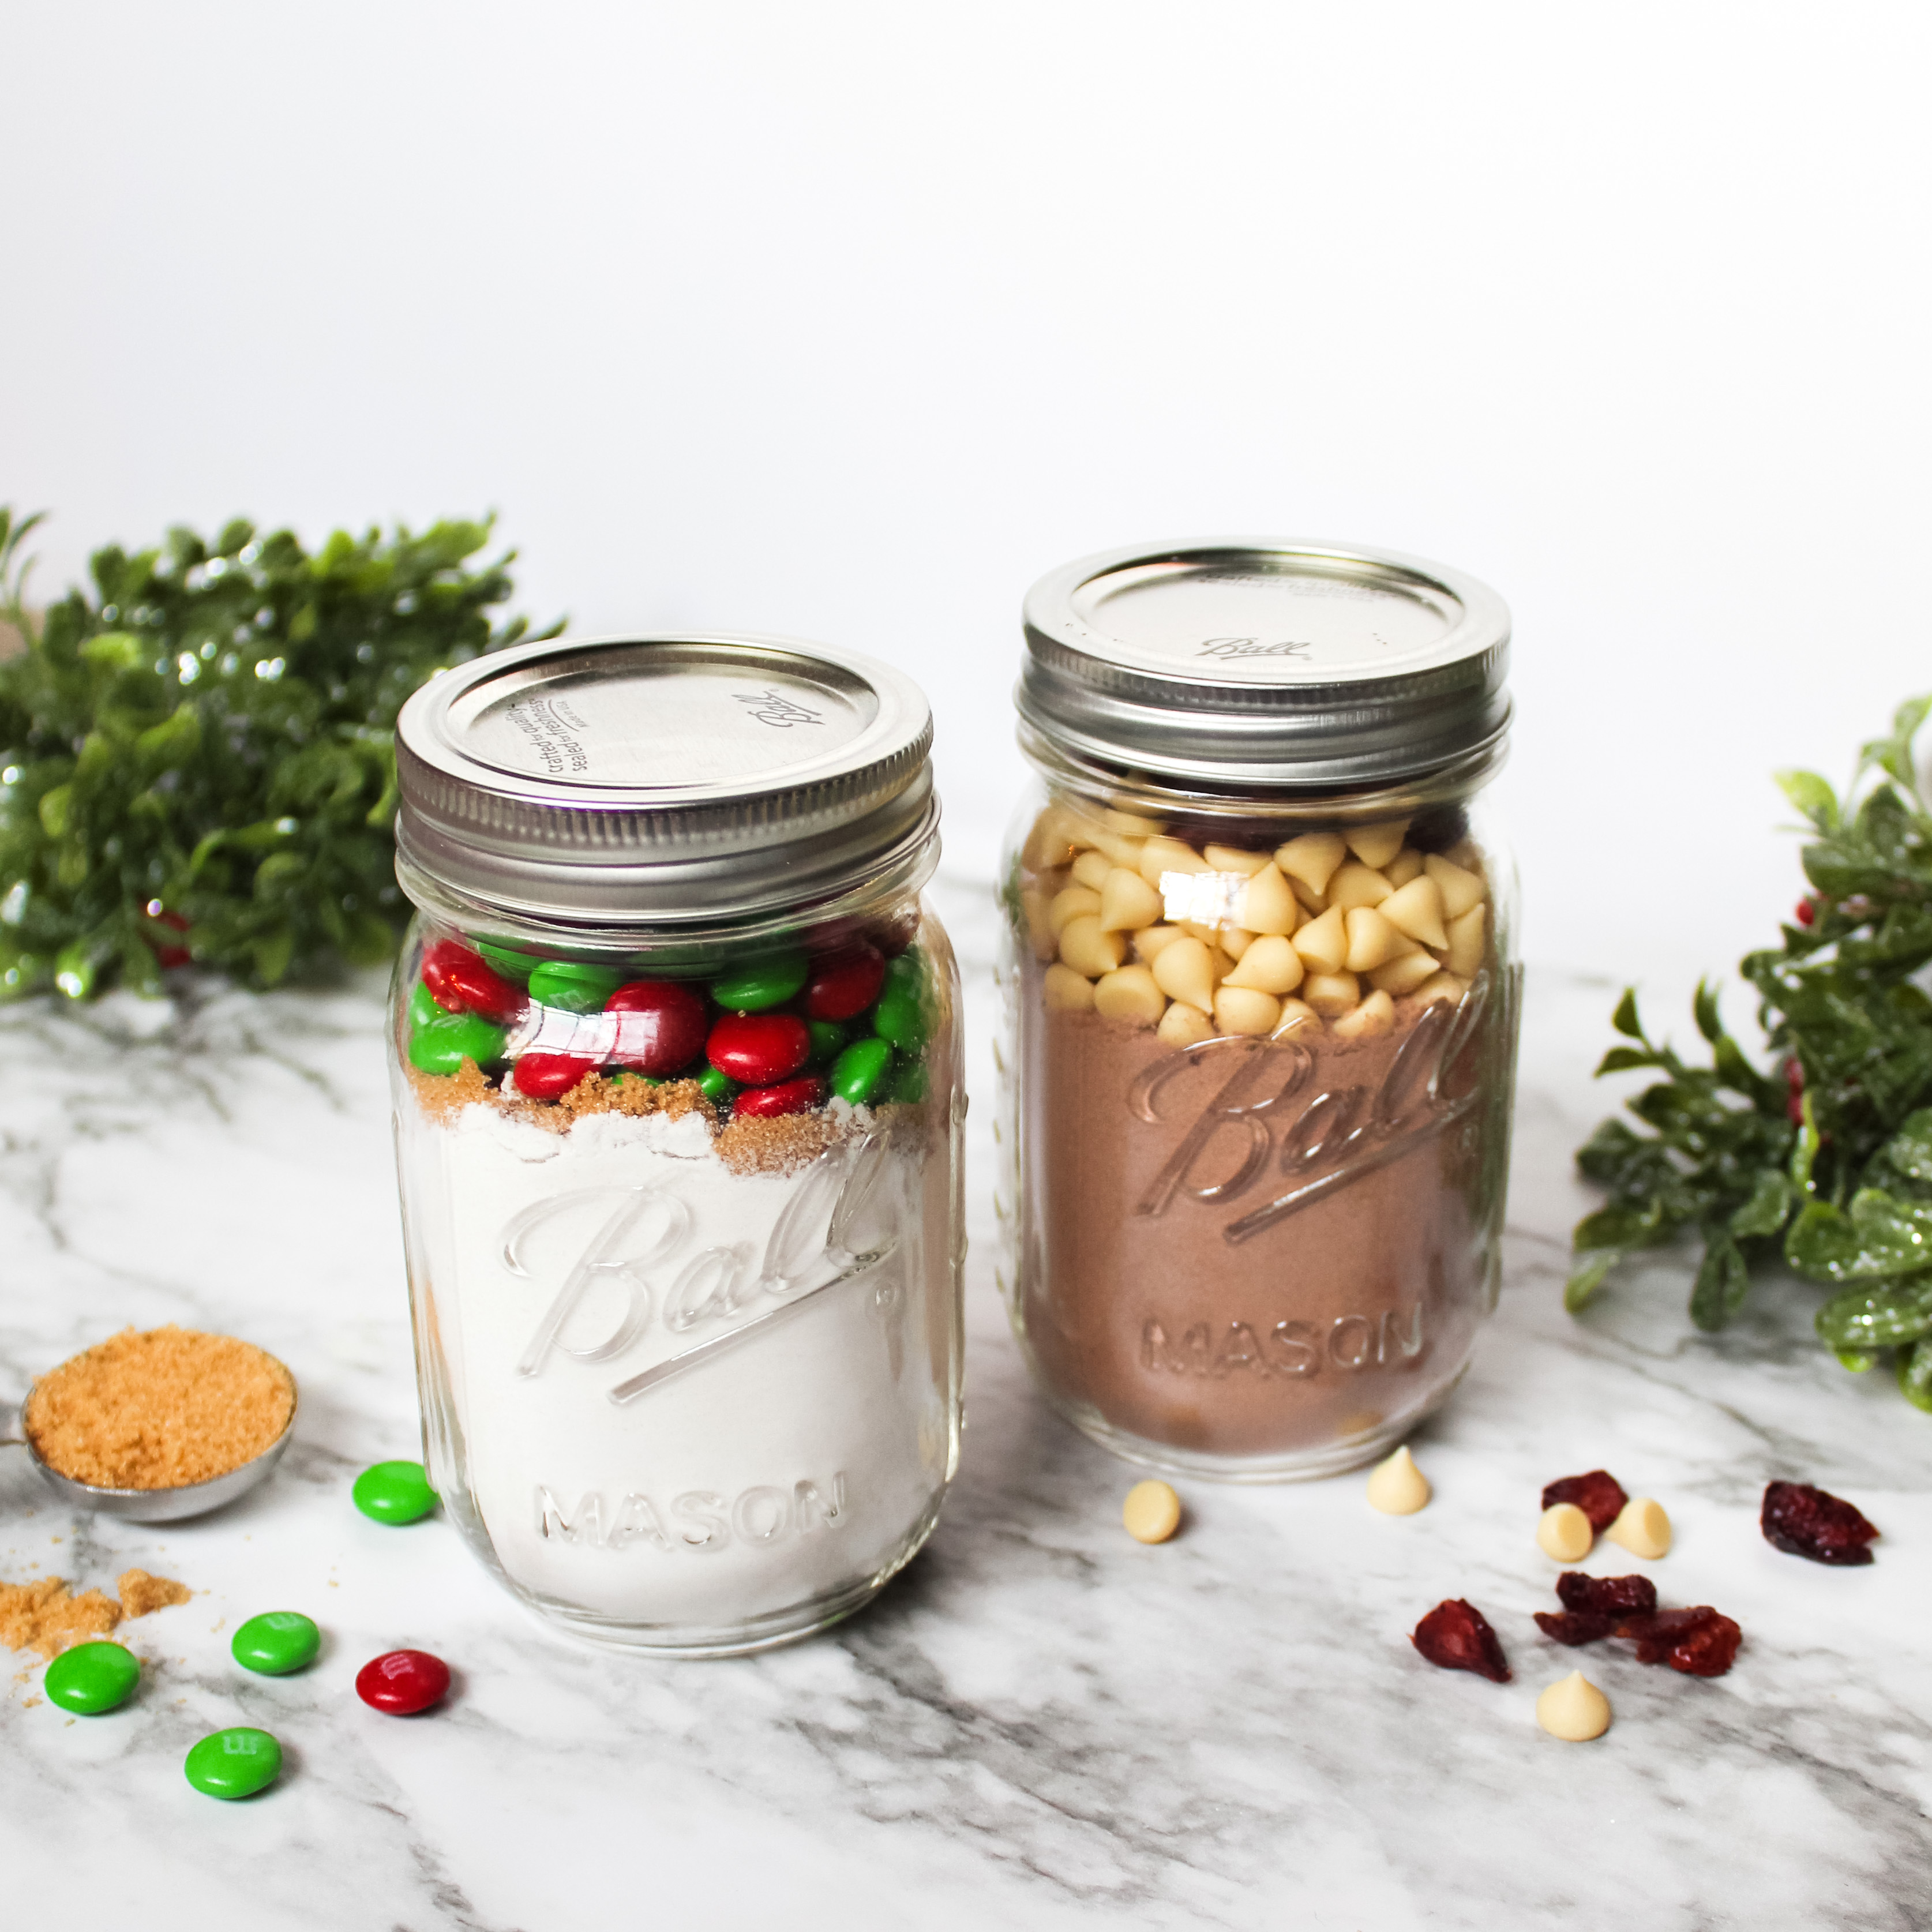 Gluten Free Cookie Mix in a Jar - great gift idea! - gfJules